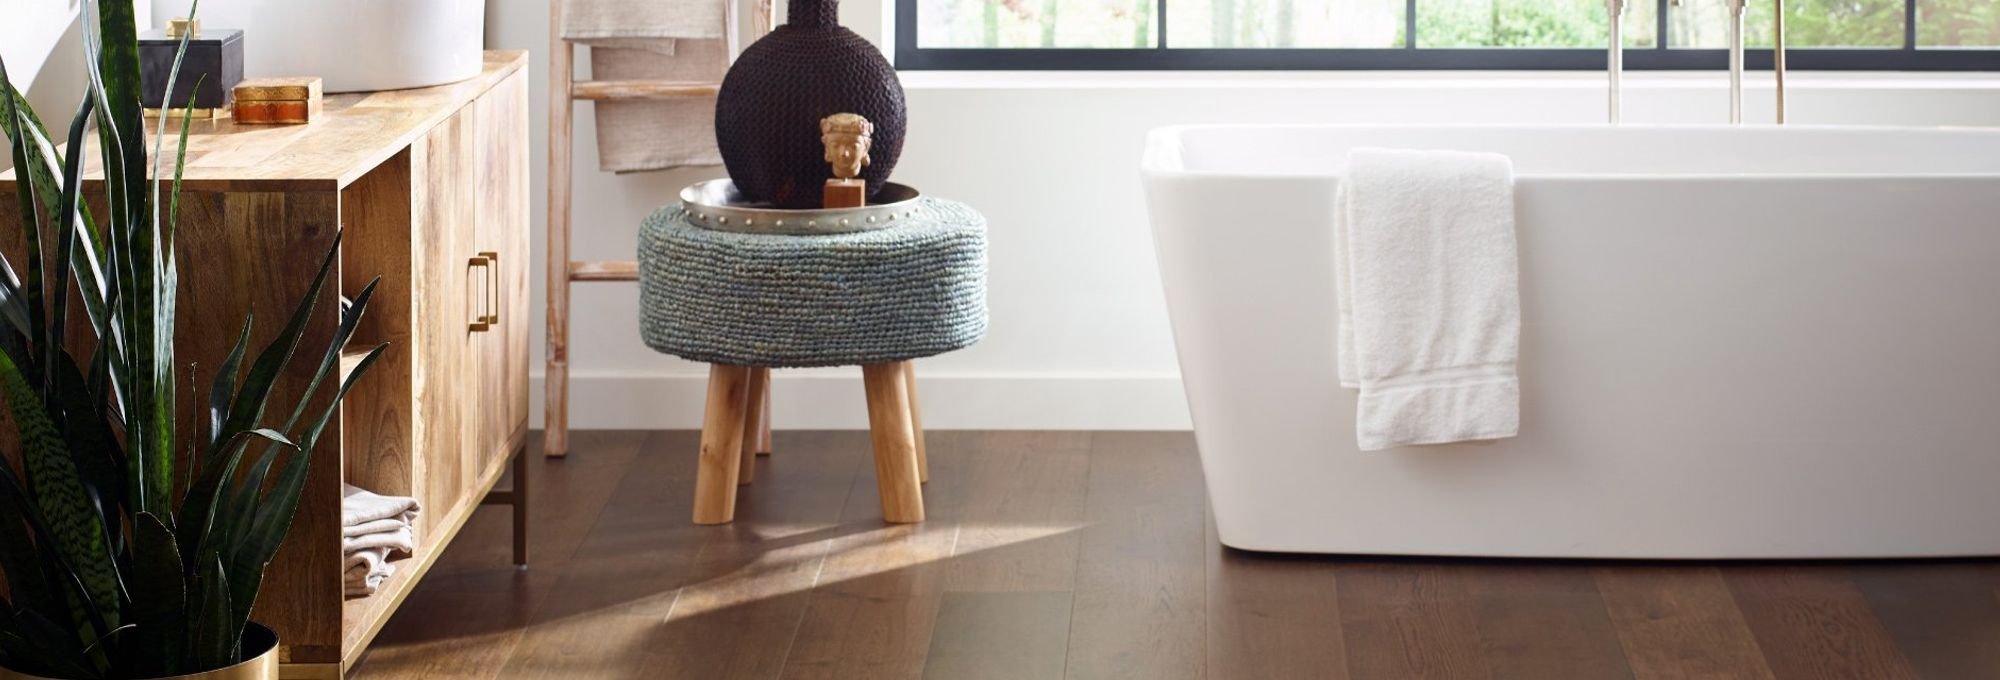 white bathtub with brown waterproof flooring from Katy Carpets in Katy, TX